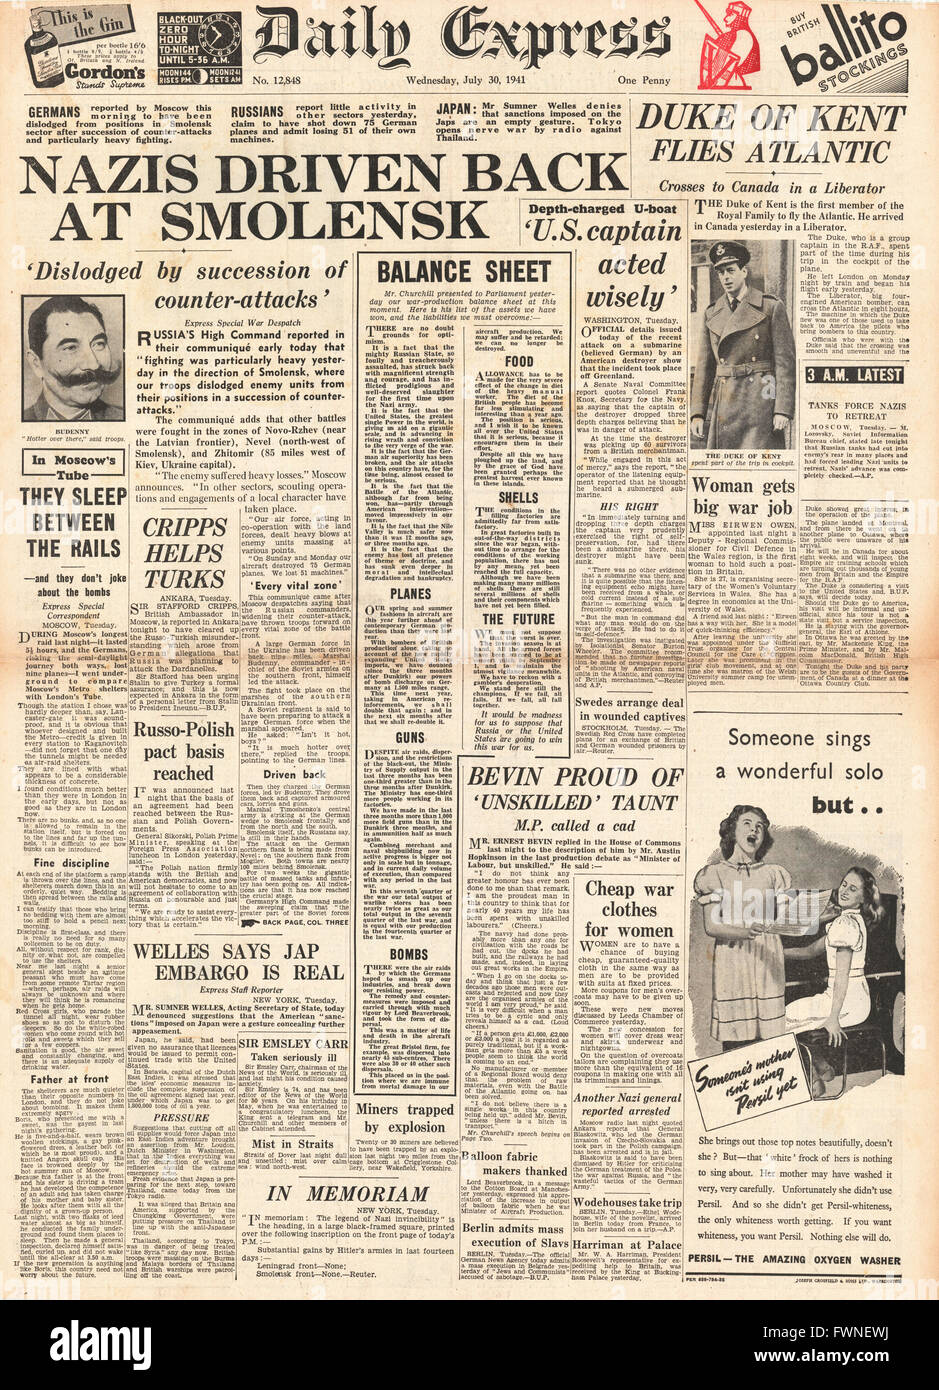 1941-Titelseite Daily Express Kampf um Smolensk und Duke of Kent fliegen Atlantic Stockfoto